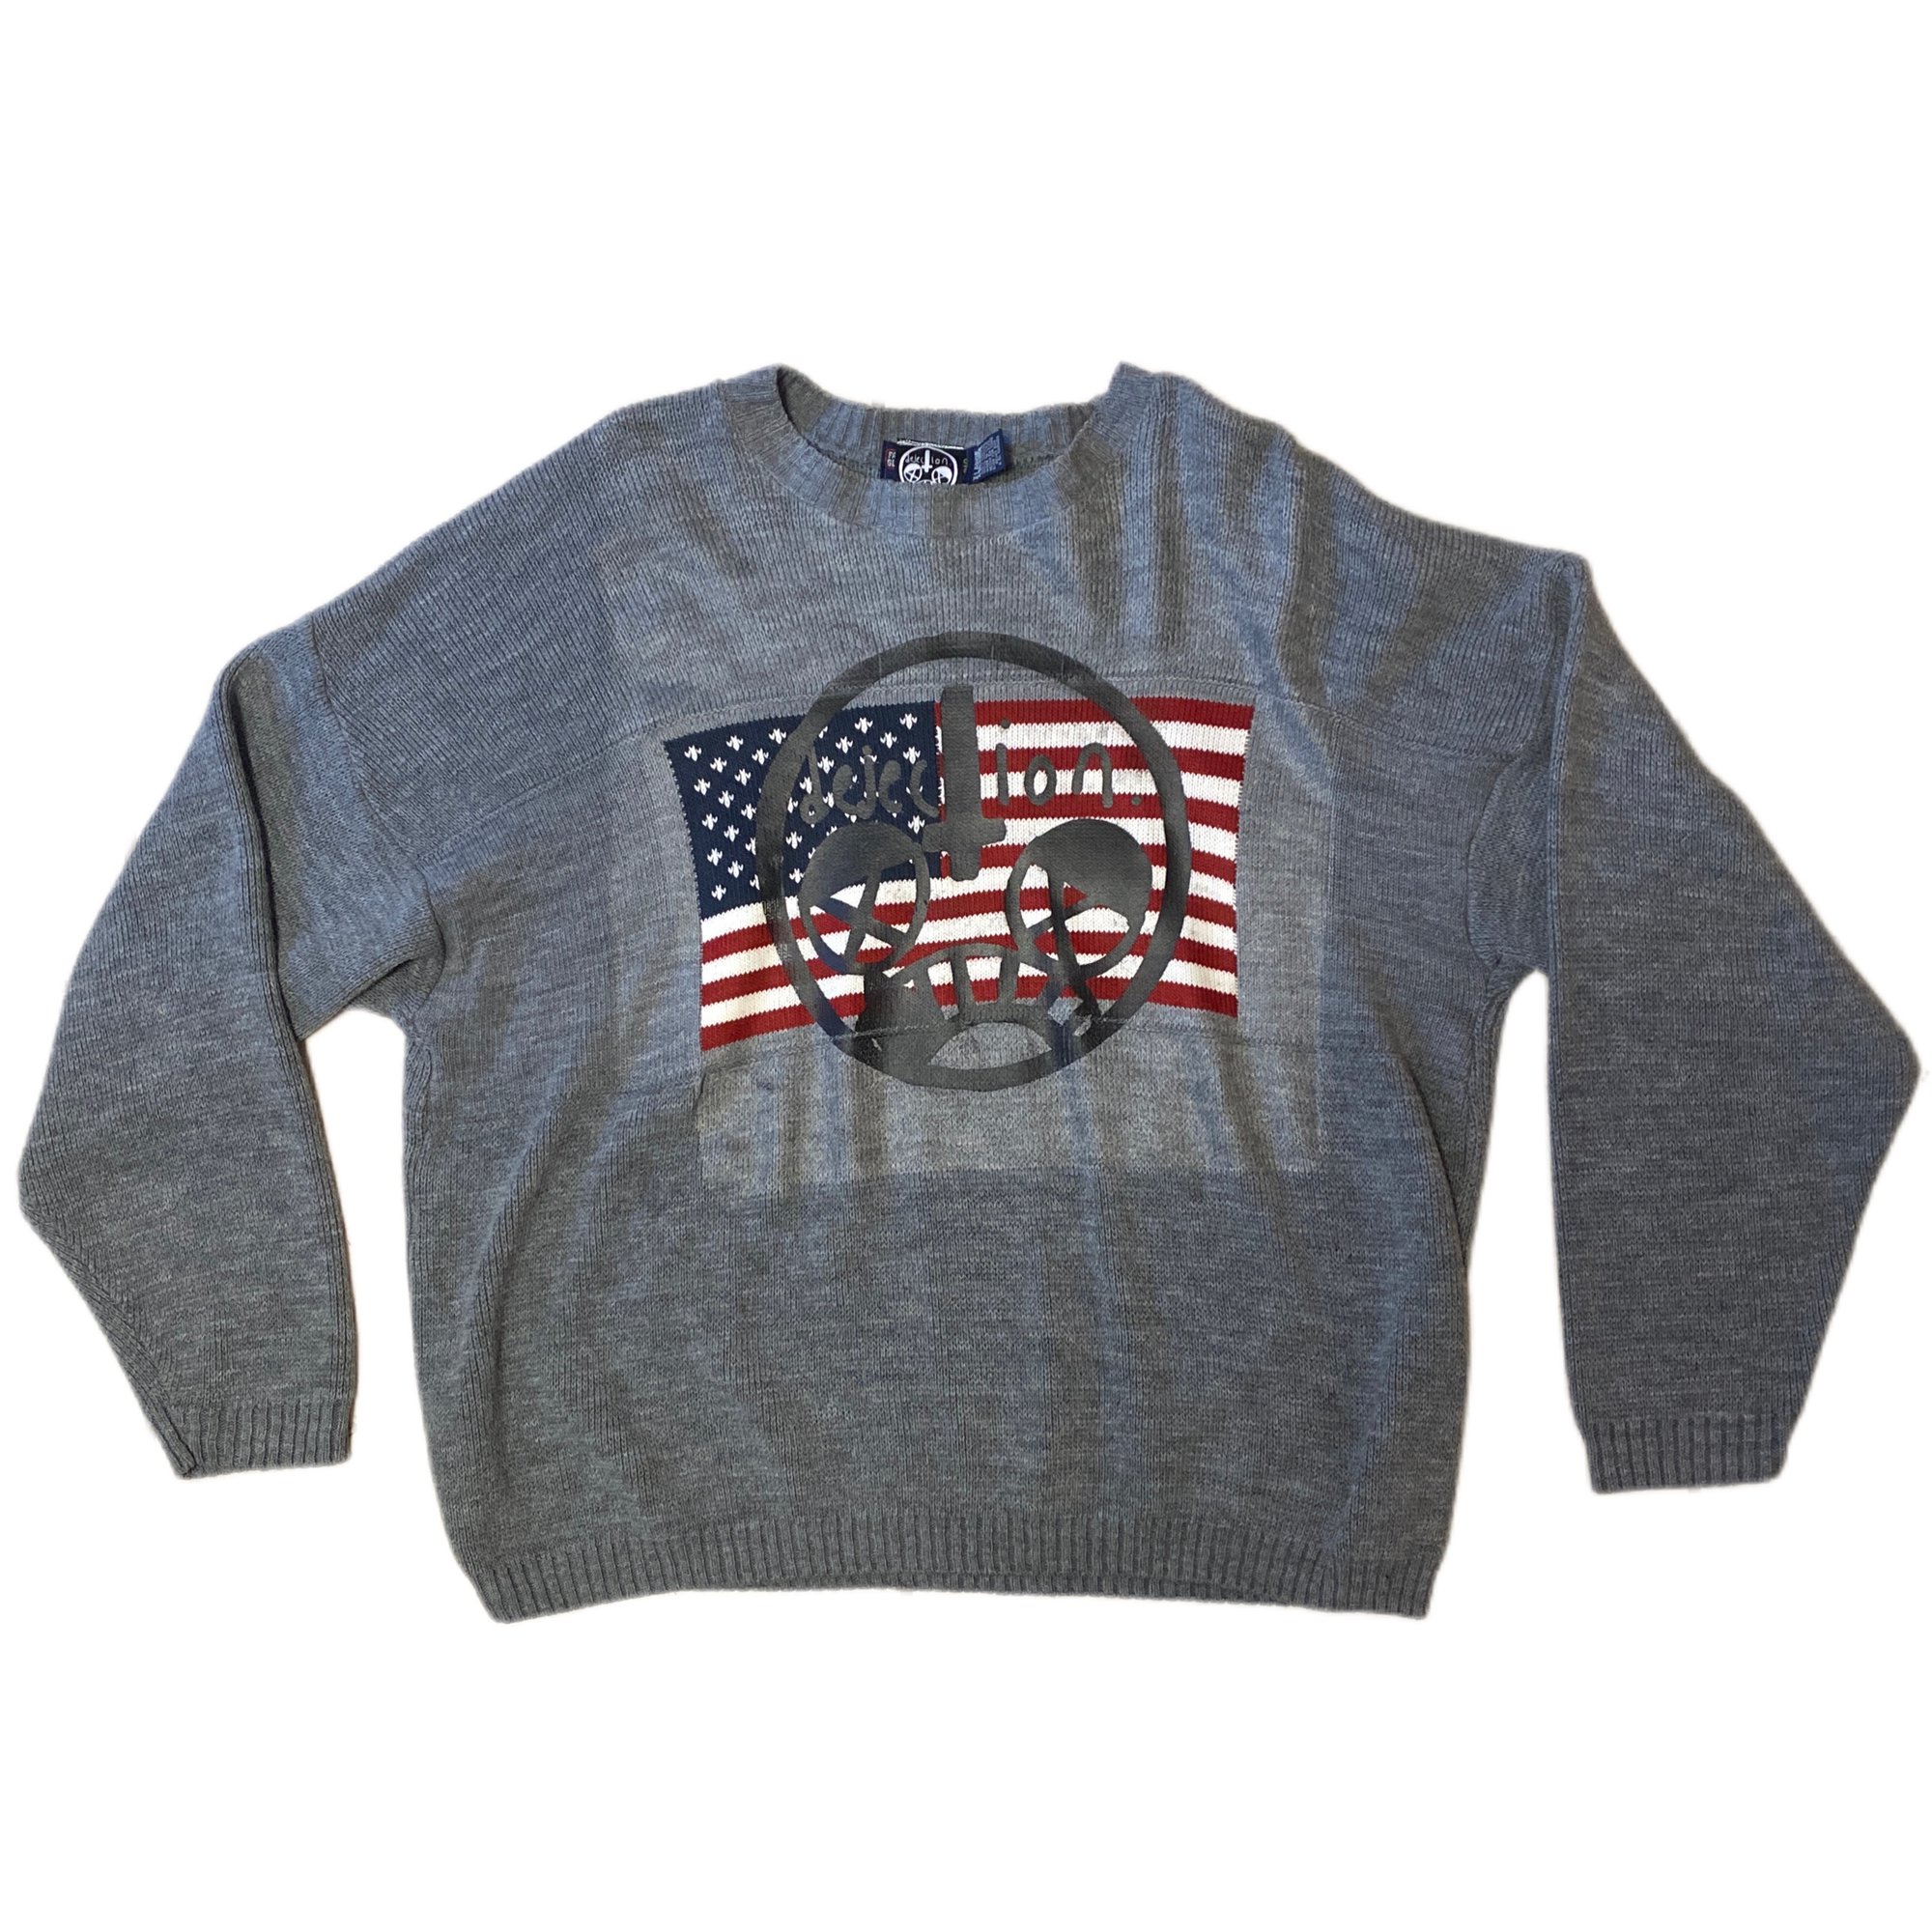 XL Knit american flag sweater